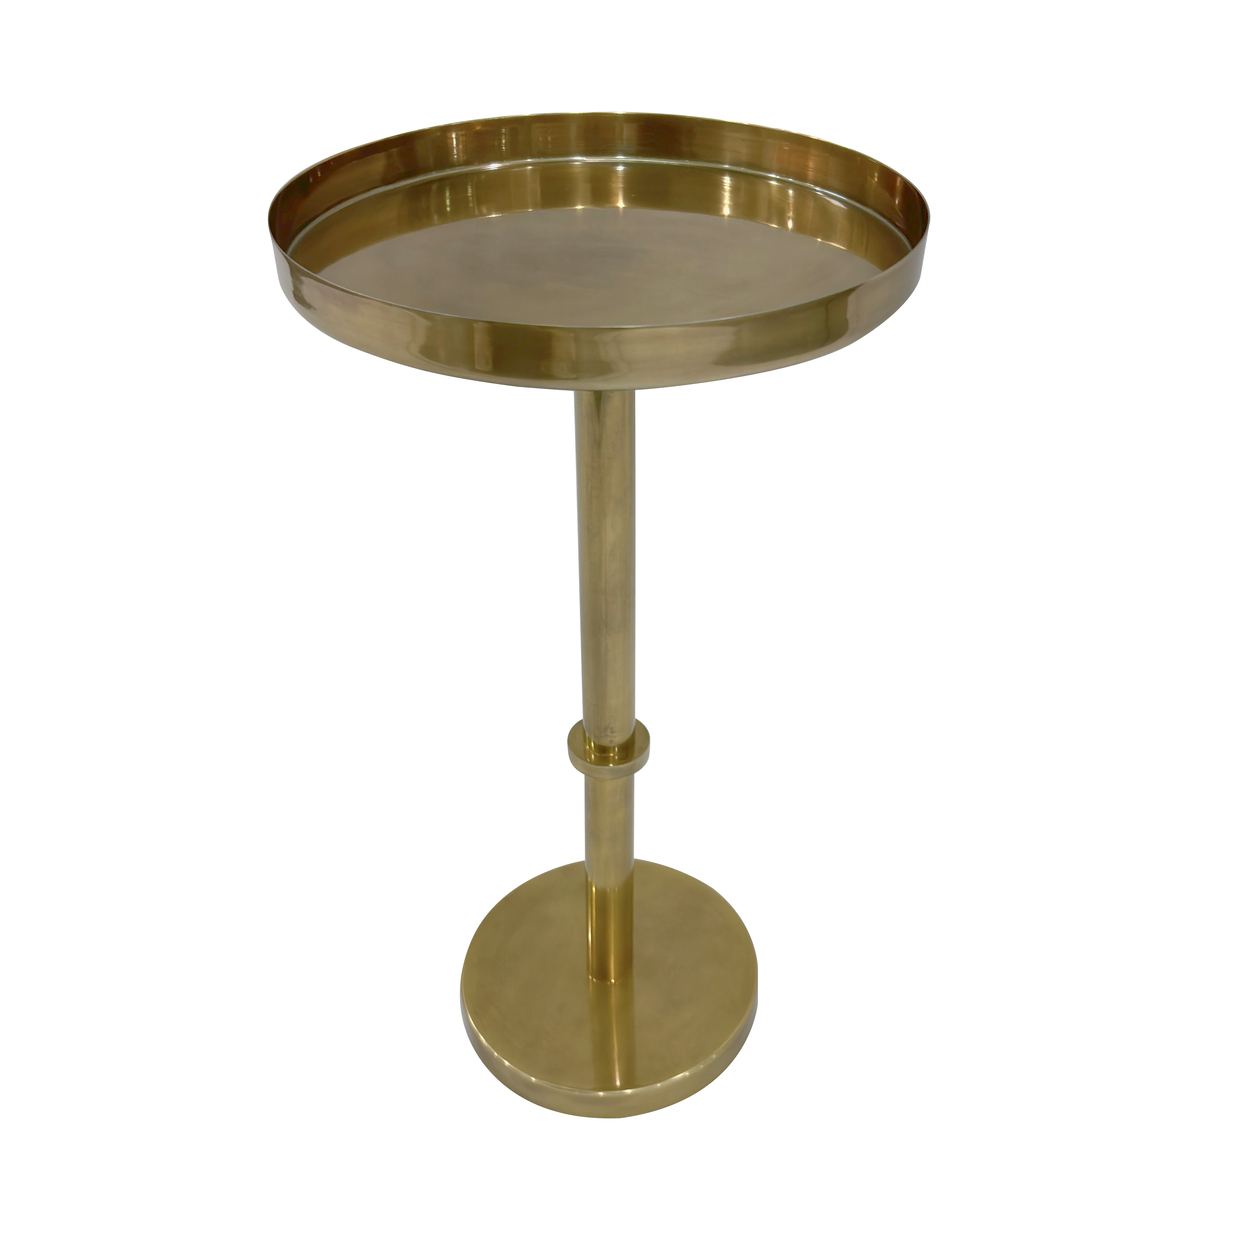 Ara 12 Inch Side End Table, Vintage Sleek Pillar Base, Round Tray Top, Oxidized Antique Brass - Saltoro Sherpi